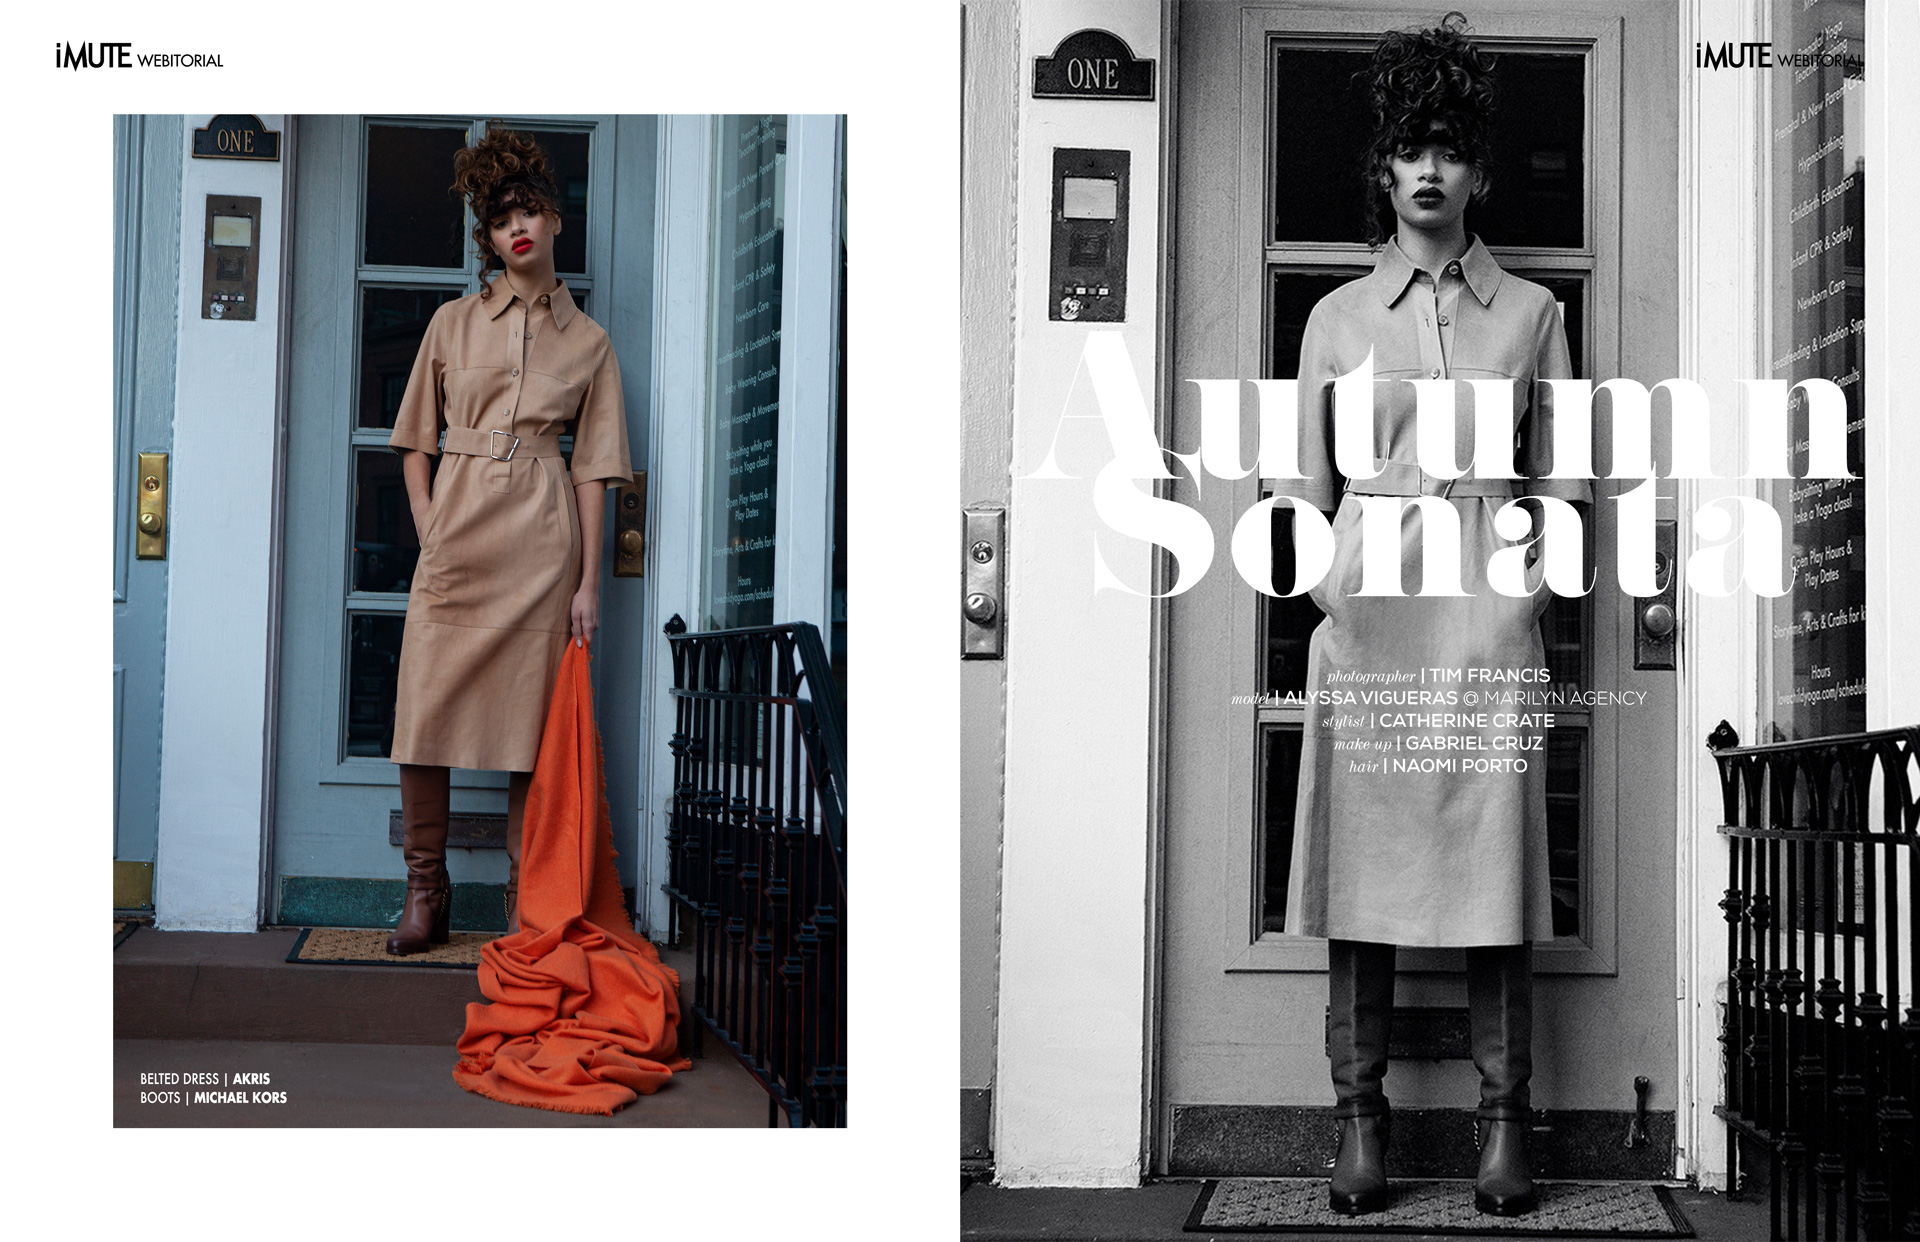 Autumn Sonata webitorial for iMute Magazine  PHOTOGRAPHER | TIM FRANCIS MODEL | ALYSSA VIGUERAS @ MARILYN AGENCY STYLIST | CATHERINE CRATE MAKEUP | GABRIEL CRUZ  HAIR | NAOMI PORTO